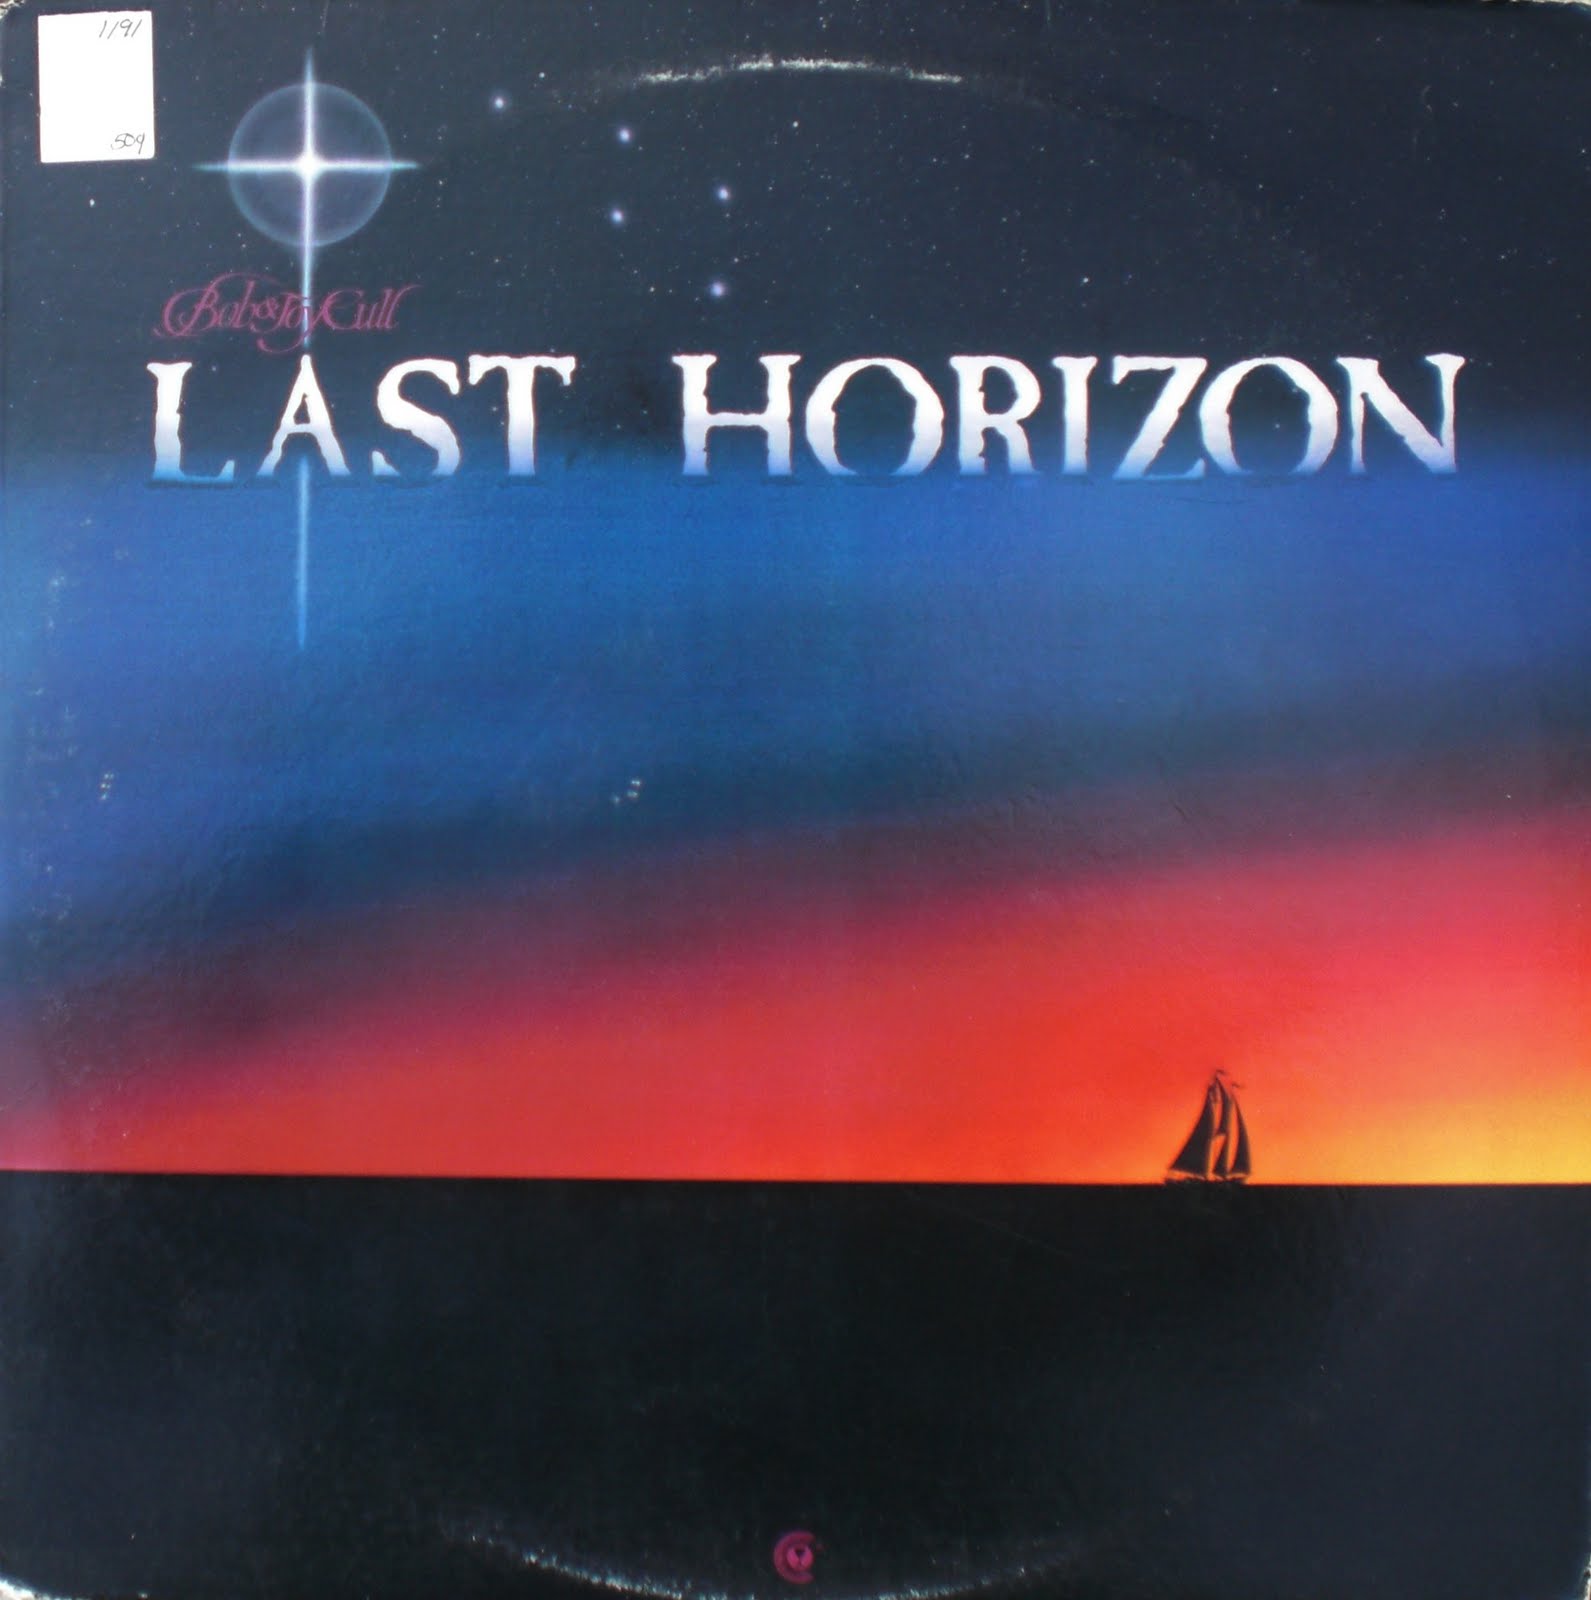 recordo obscura: the soundtrack of nobody's life: LAST HORIZON